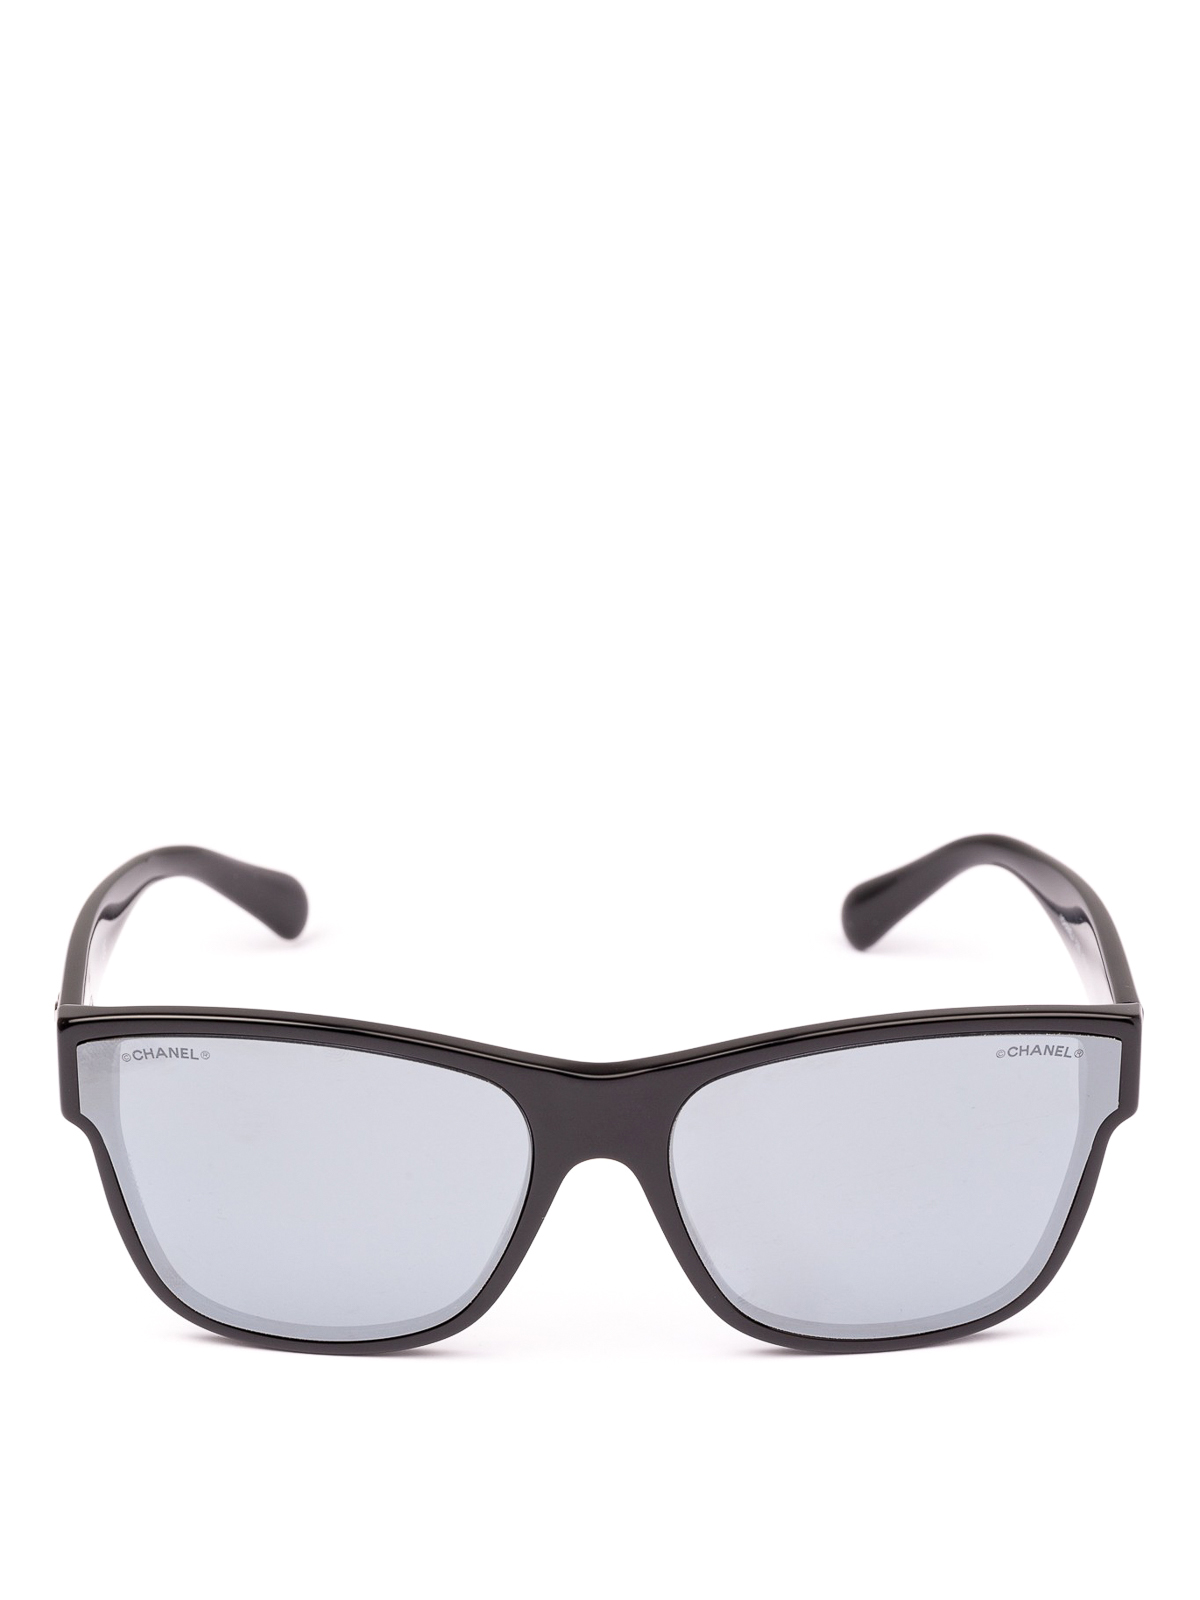 Sunglasses Chanel - Full rim rectangle sunglasses - 5386C5016G 